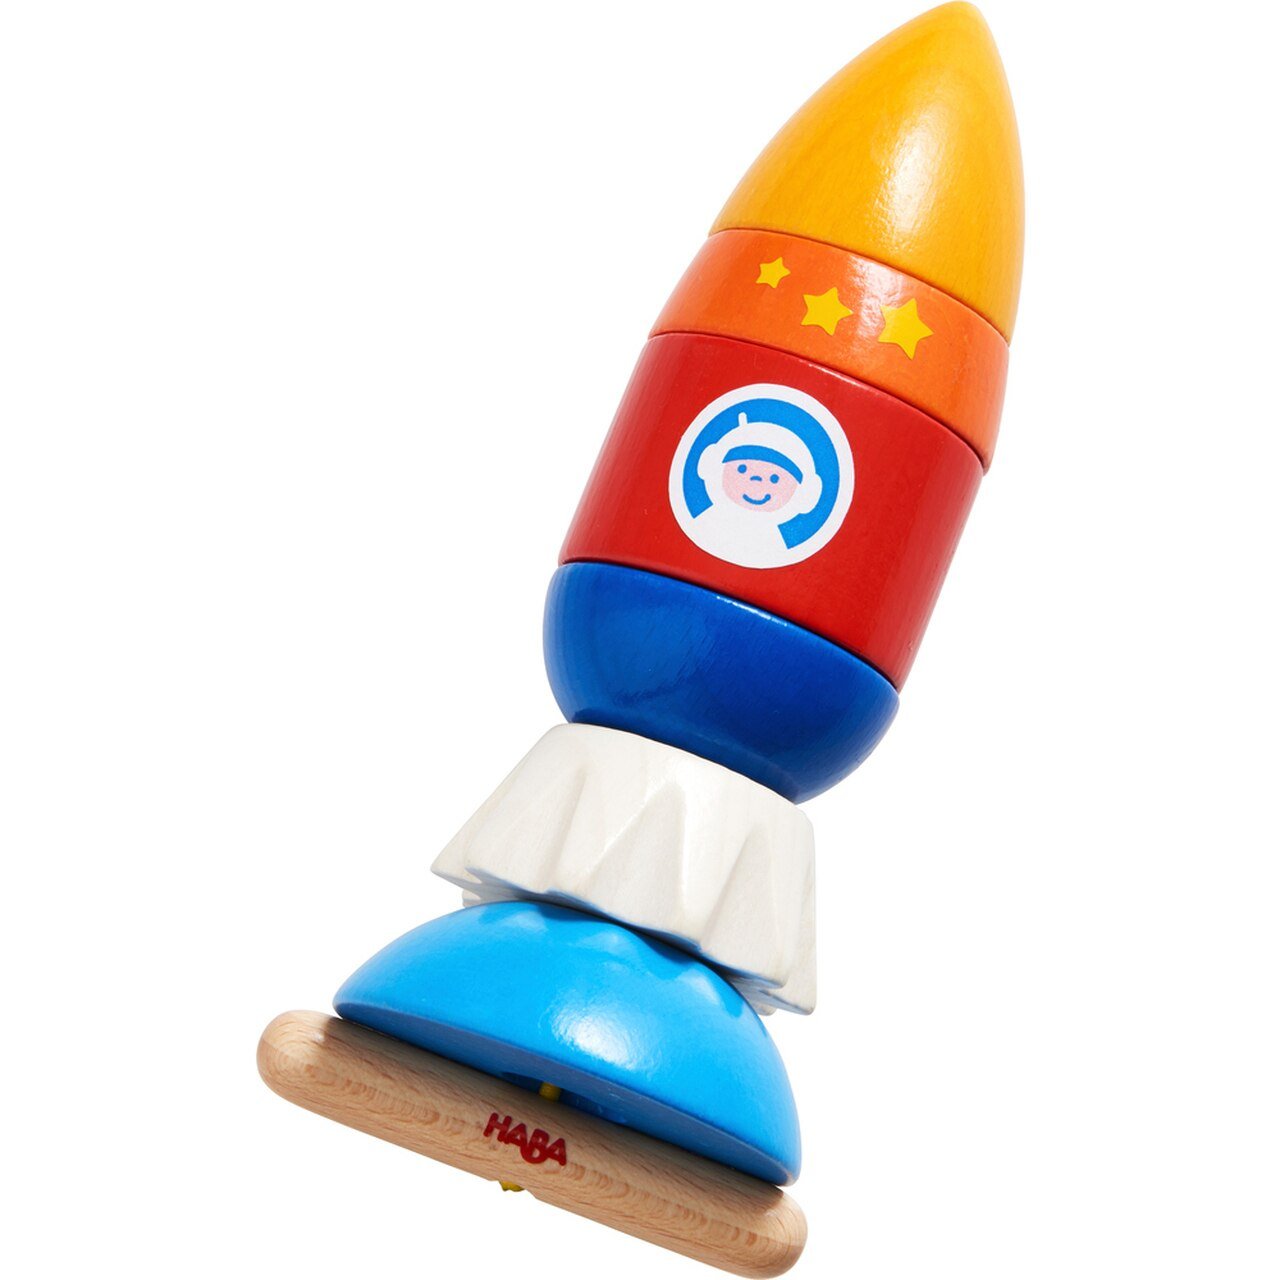 HABA Rocket Threading Game - Wood Wood Toys Canada's Favourite Montessori Toy Store